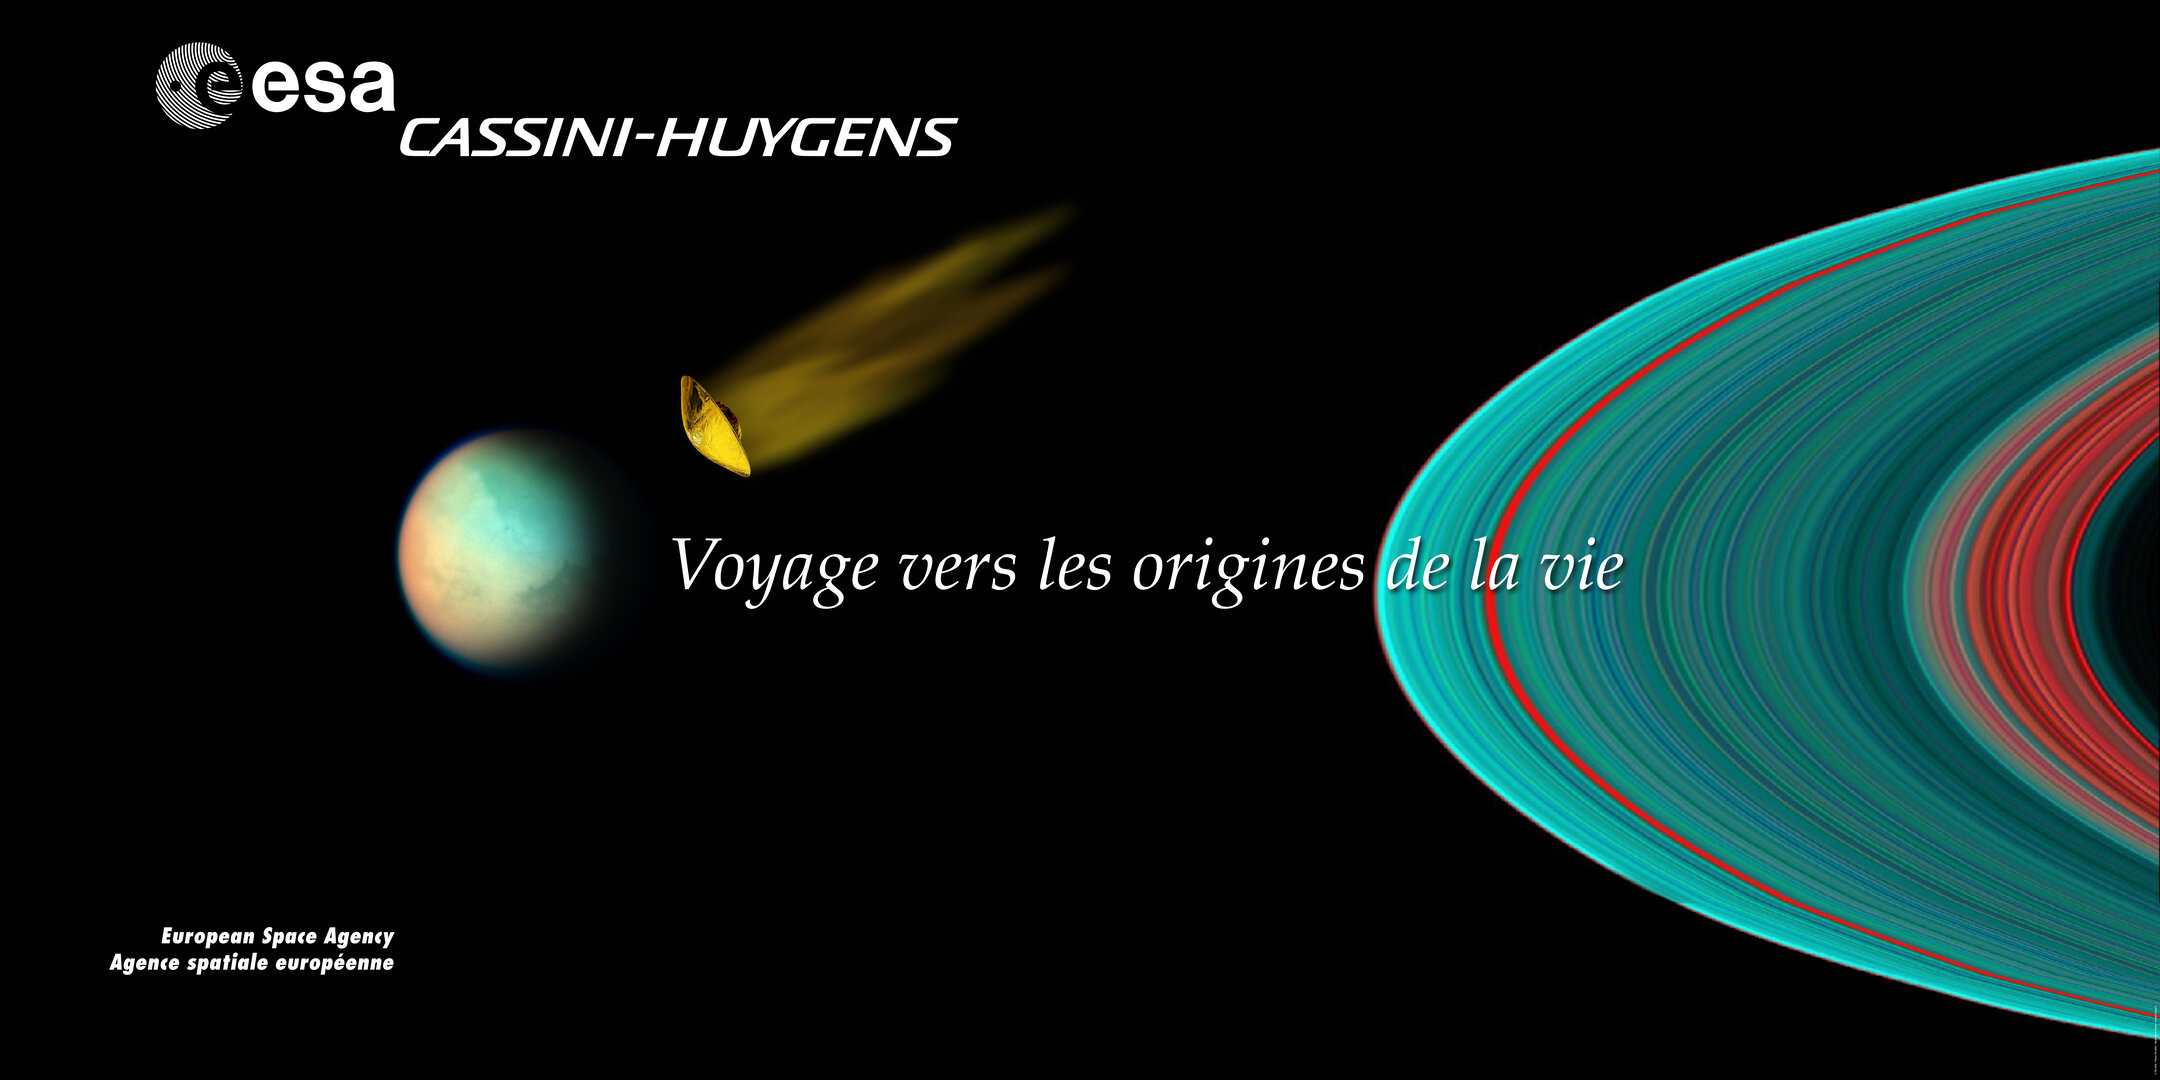 Cassini-Huygens voyage vers les origines de la vie